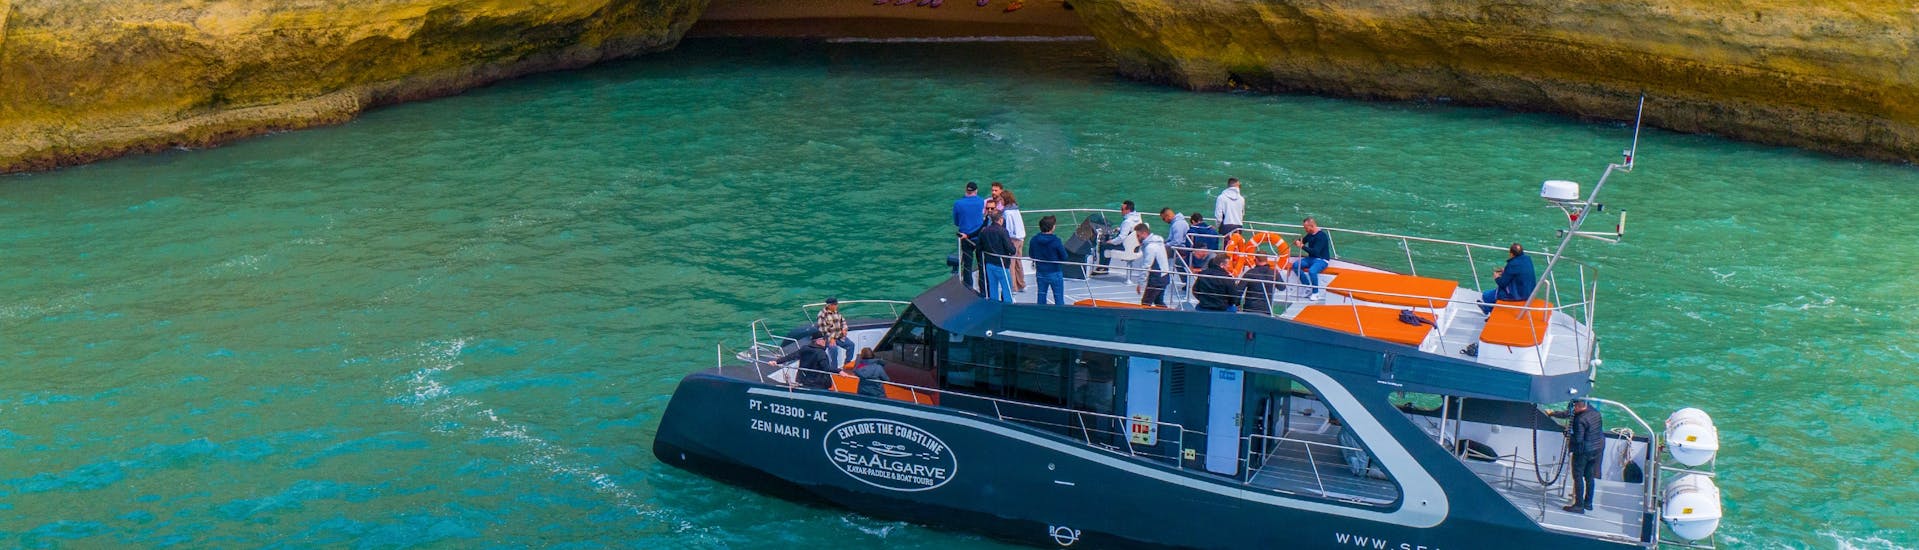 De catamaran van SeaAlgarve Albufeira nadert de Benagil Grot tijdens de Benagil Boat Tour.